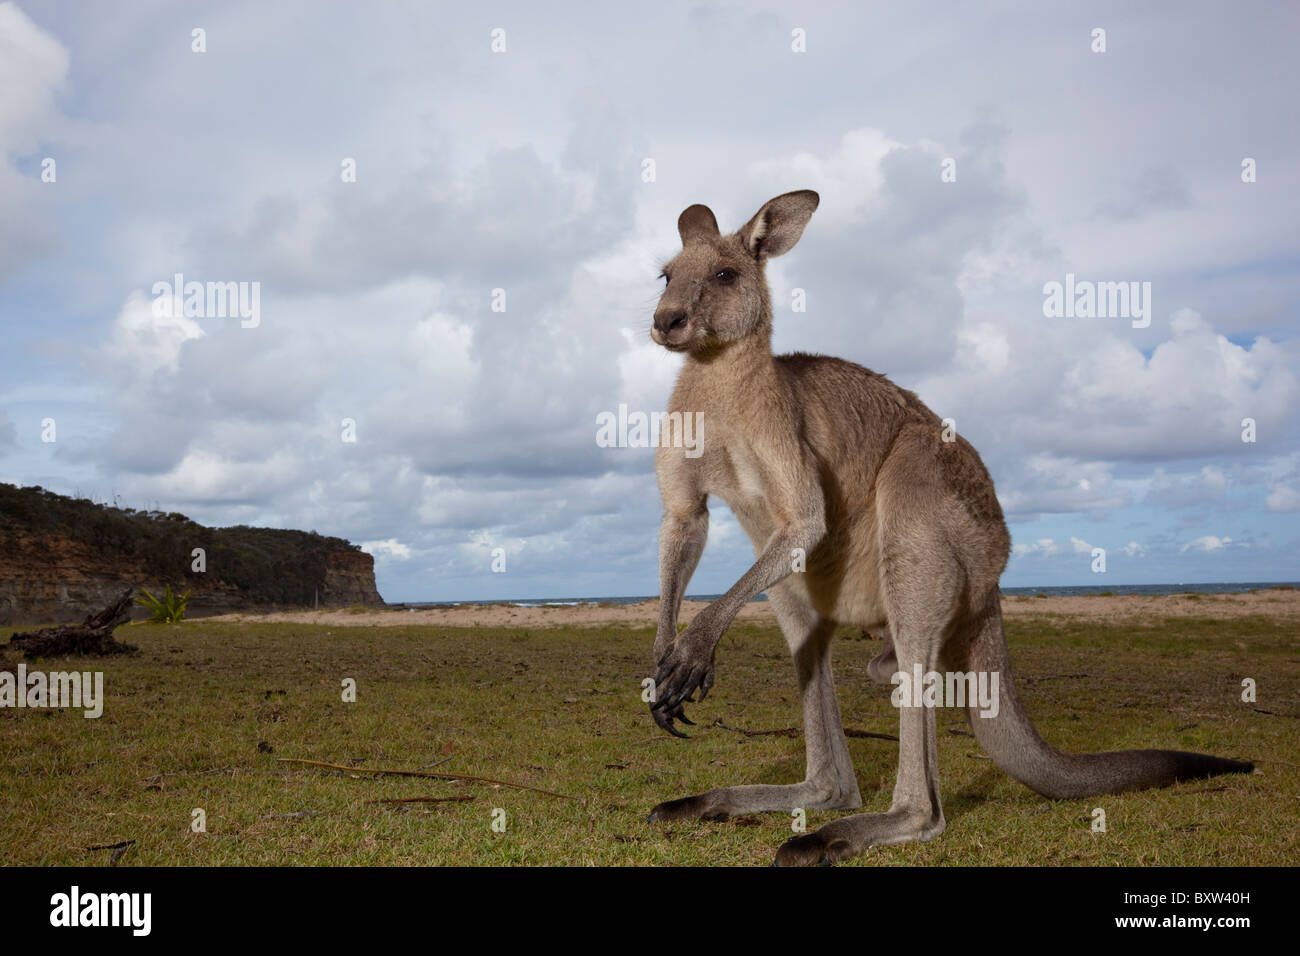 Australia, New South Wales, Murramarang National Park, Eastern Gray Kangaroo on beach Stock Photo